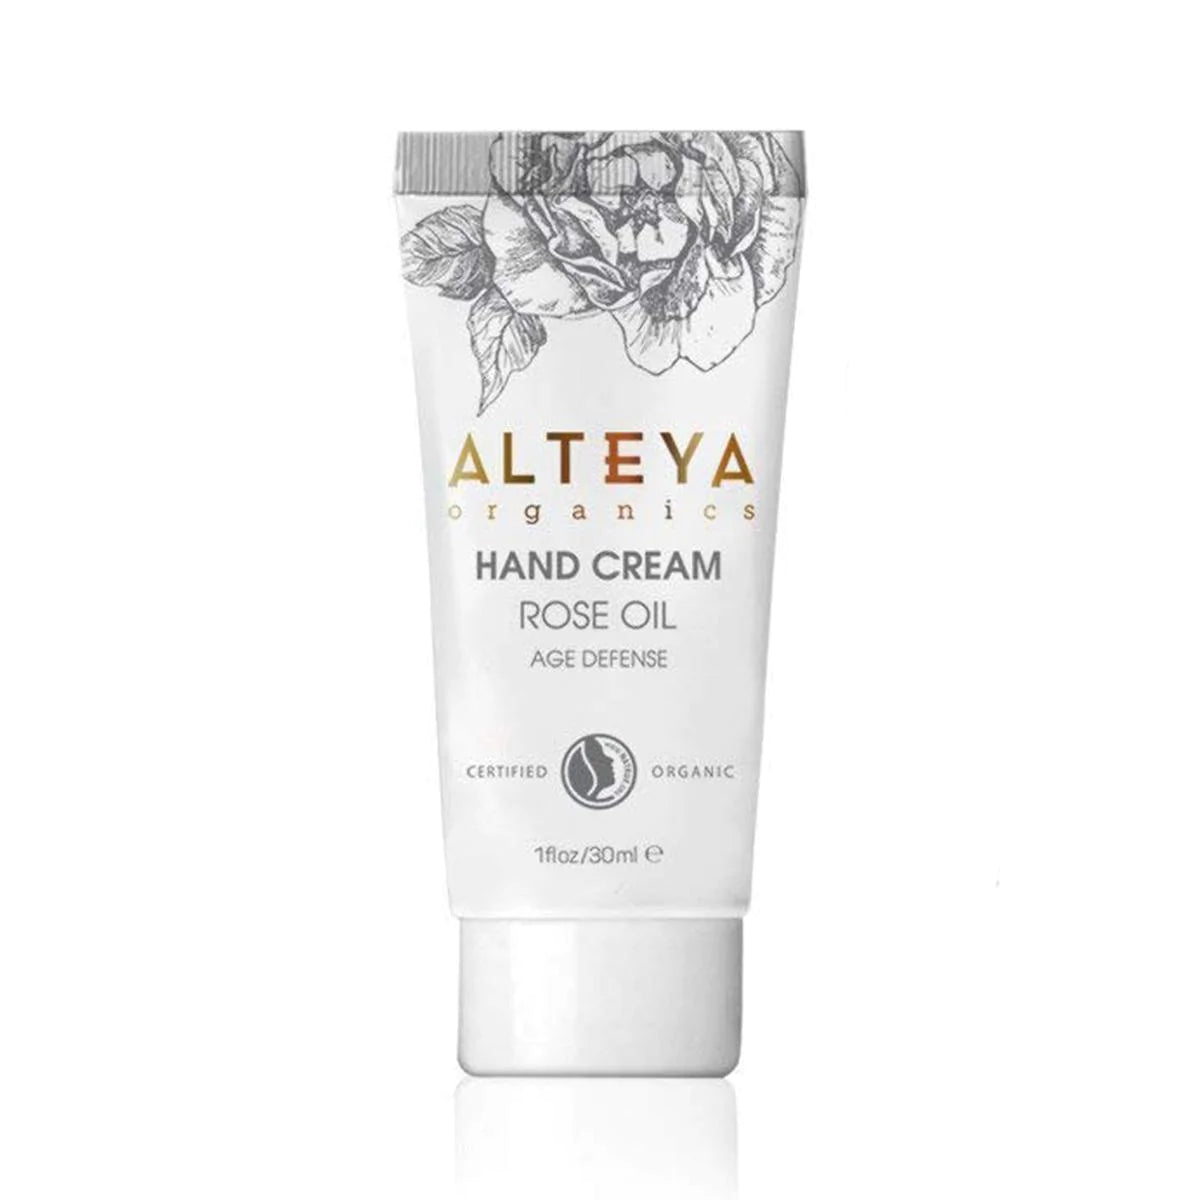 ✅ Alteya Organics Organic Hand Cream Rose Oil 30ml